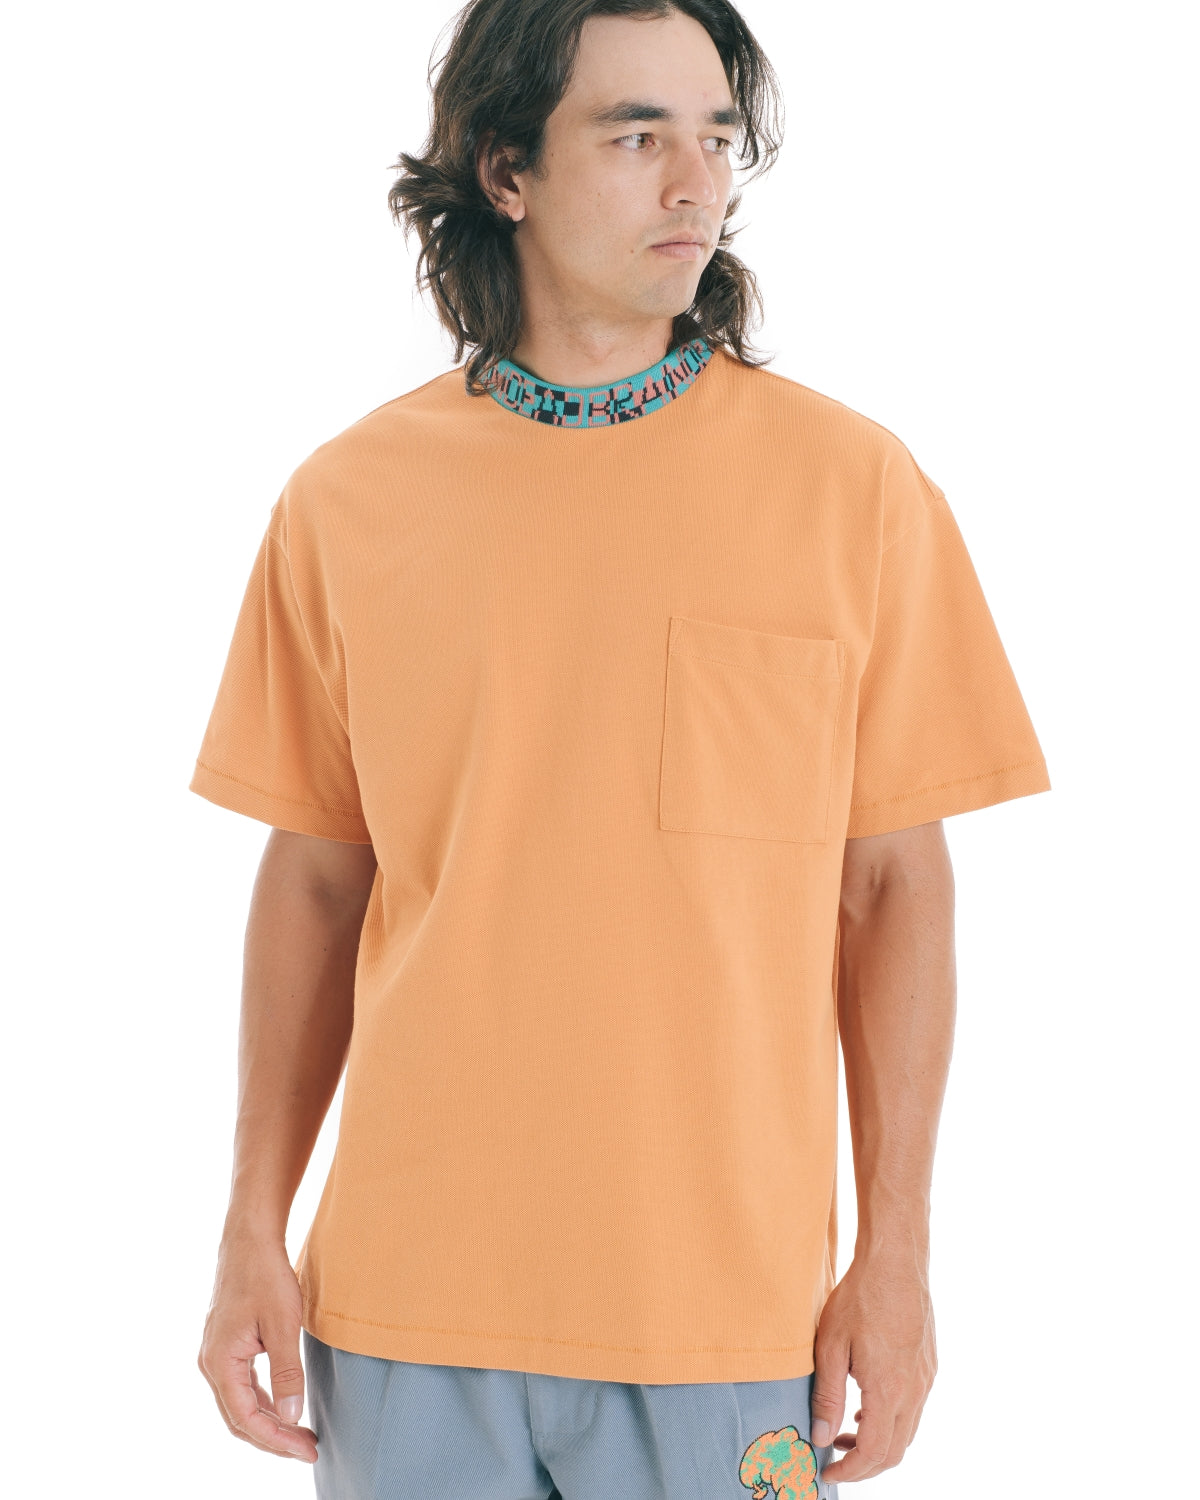 Jacquarded Collar Pique Mock Neck Shirt - Orange 5